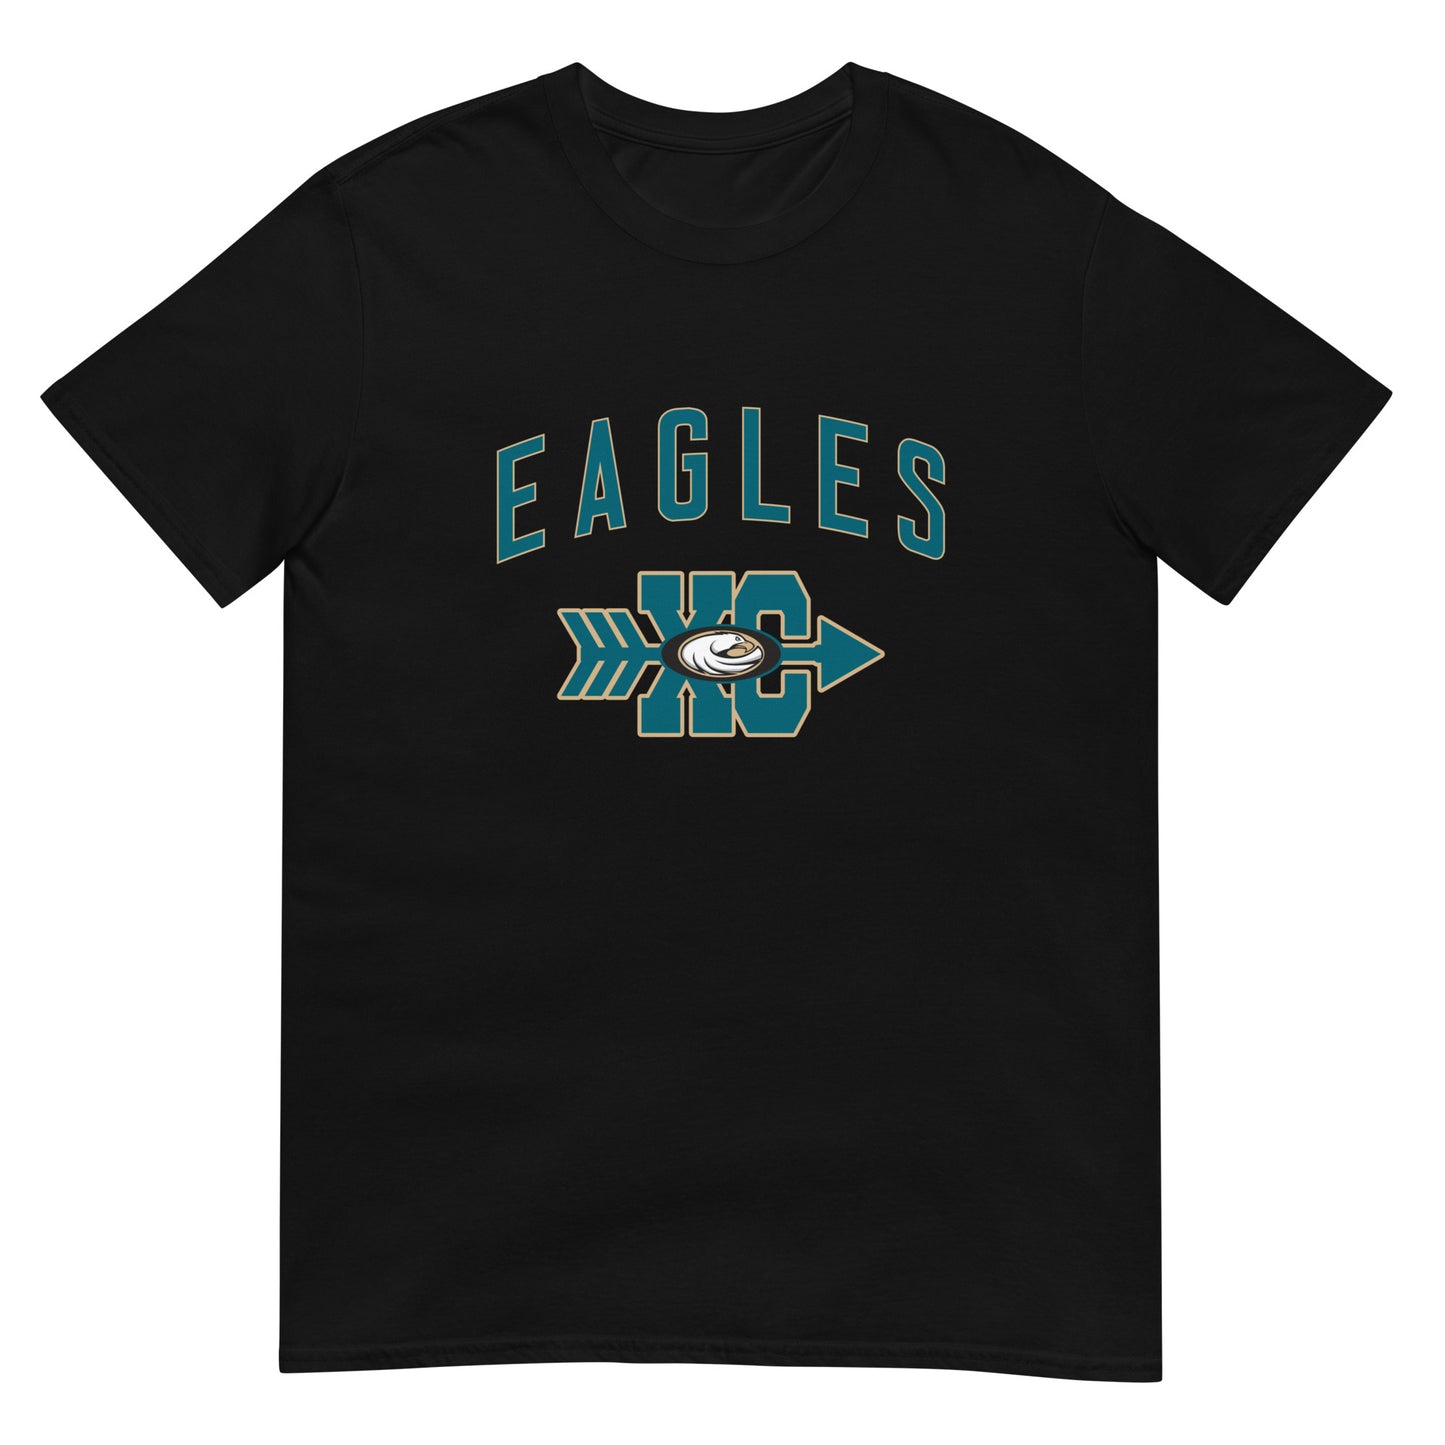 Eagles Cross Country Short-Sleeve Unisex T-Shirt